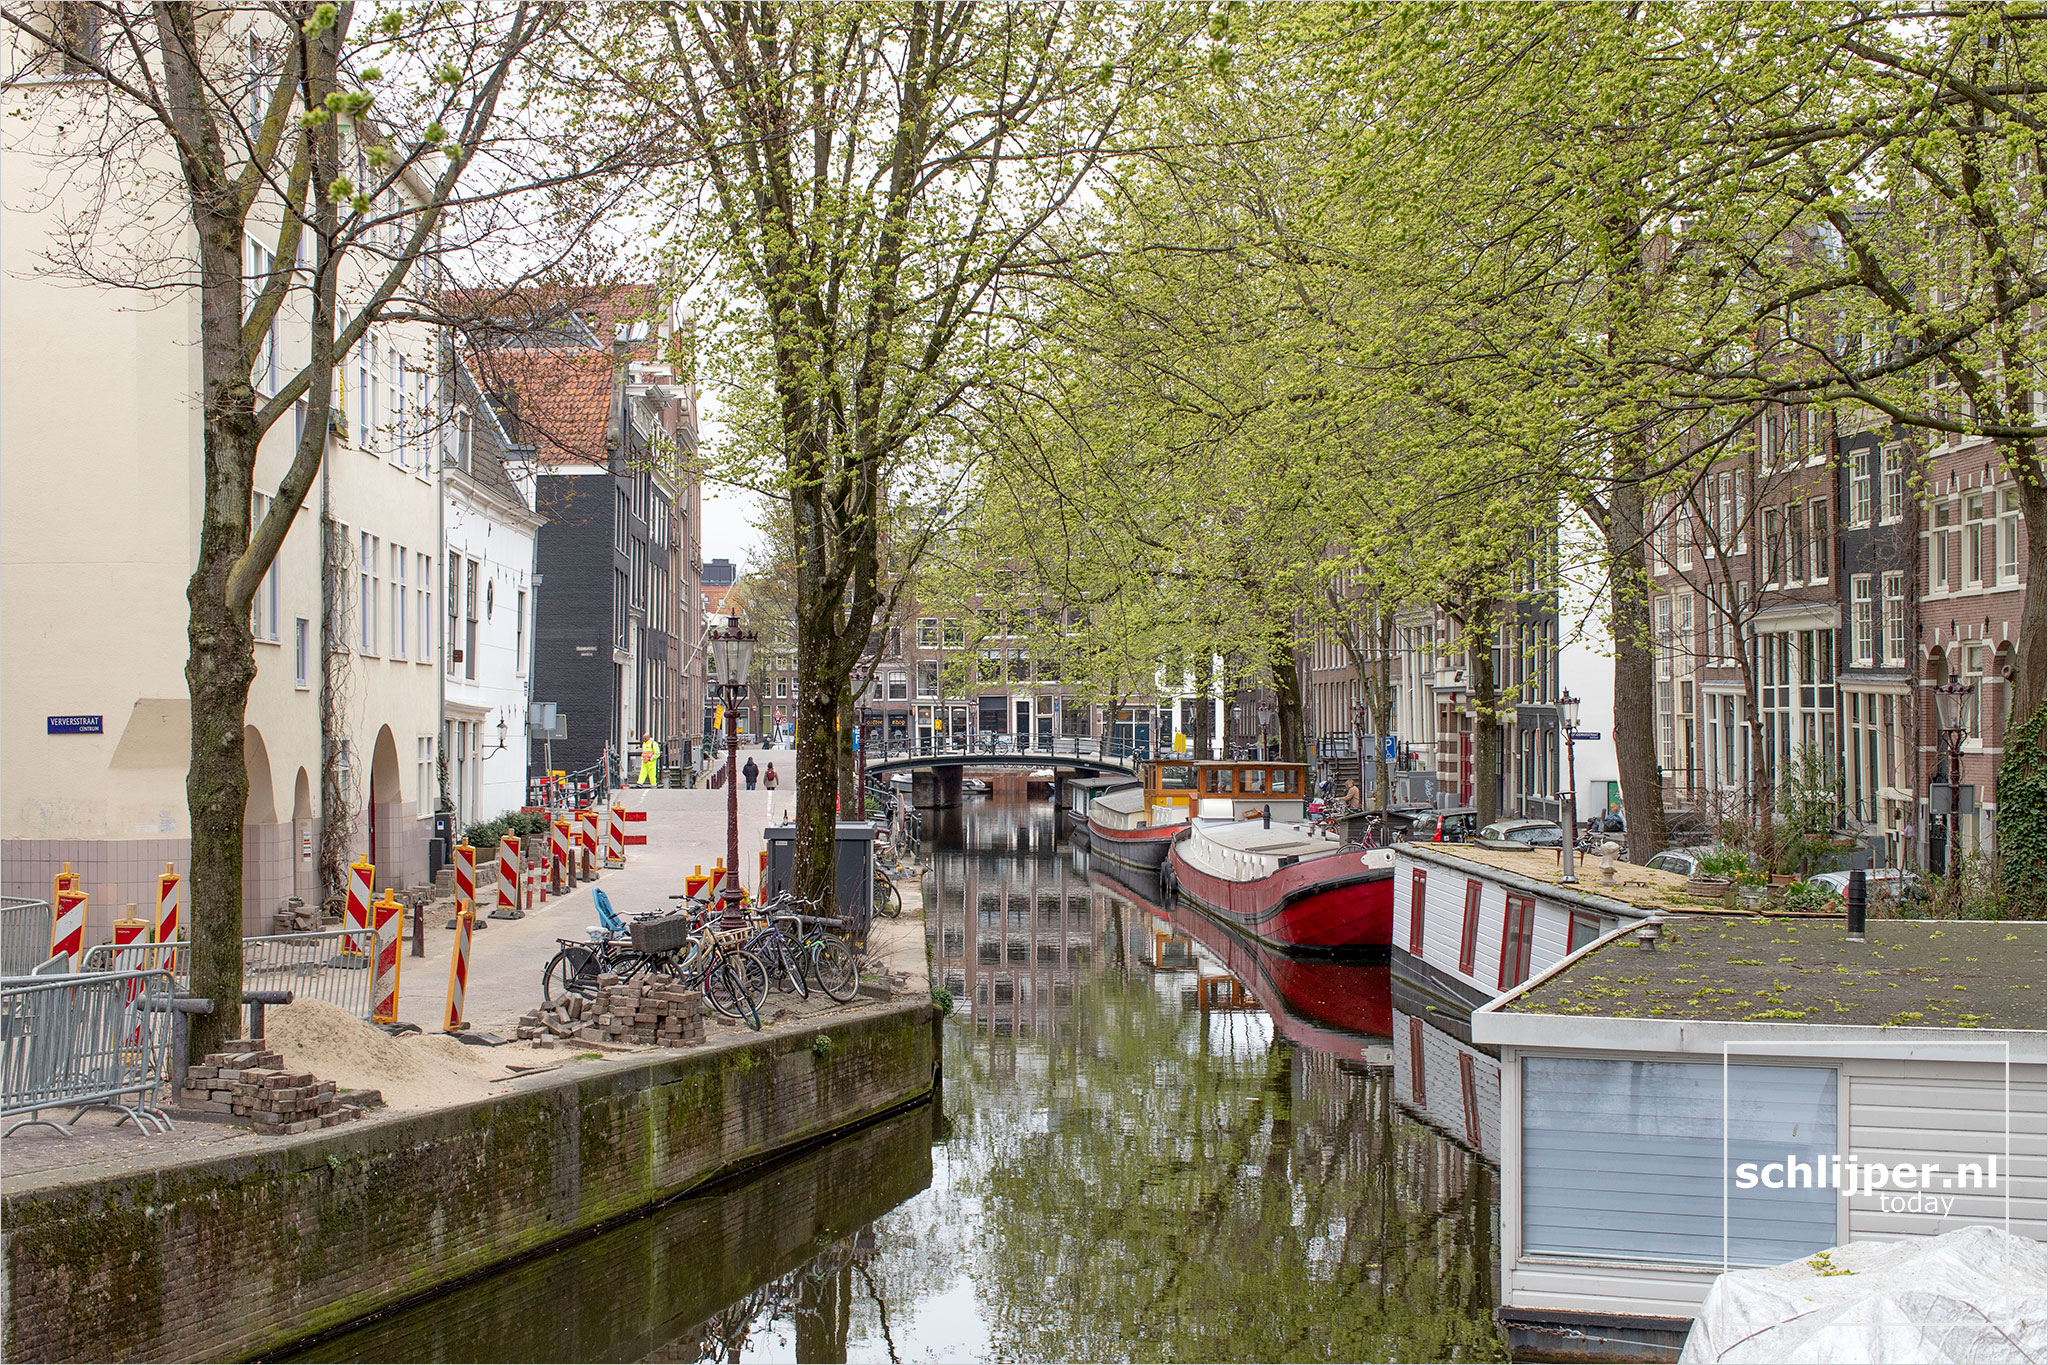 The Netherlands, Amsterdam, 4 april 2021